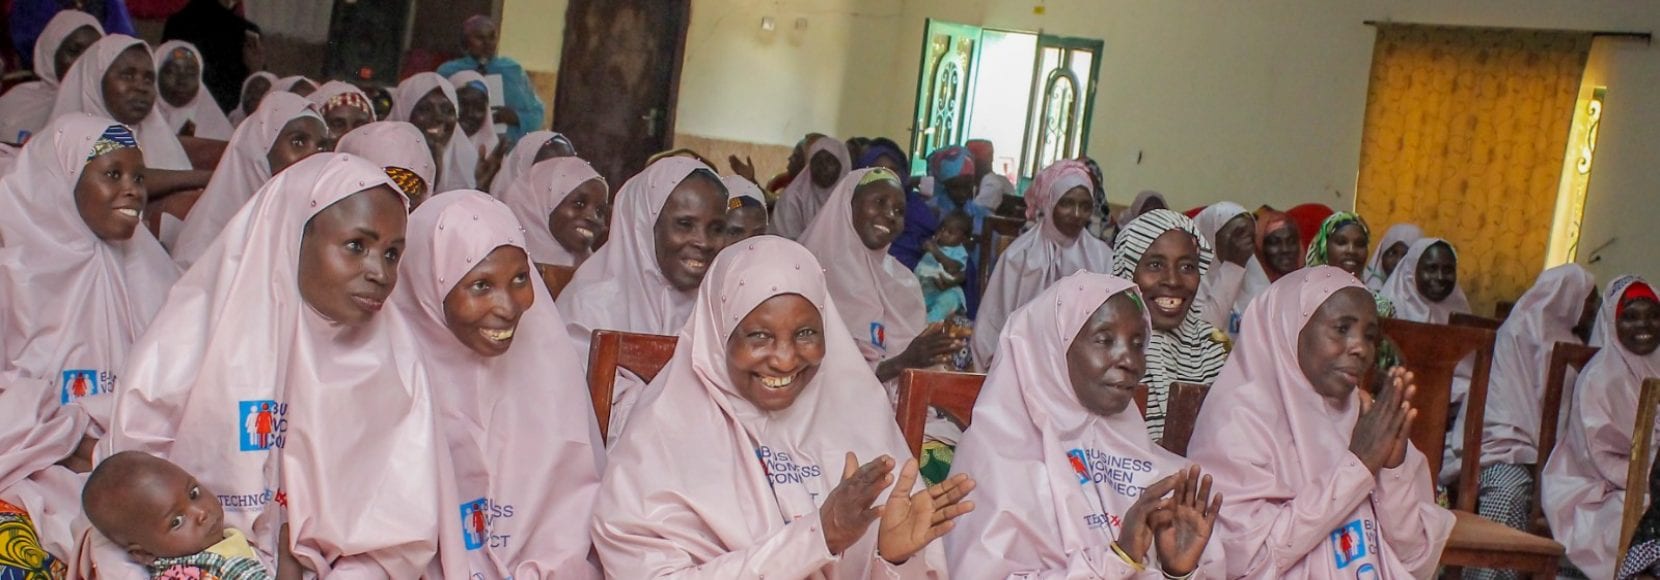 Group of women smiling in rural Nigeria